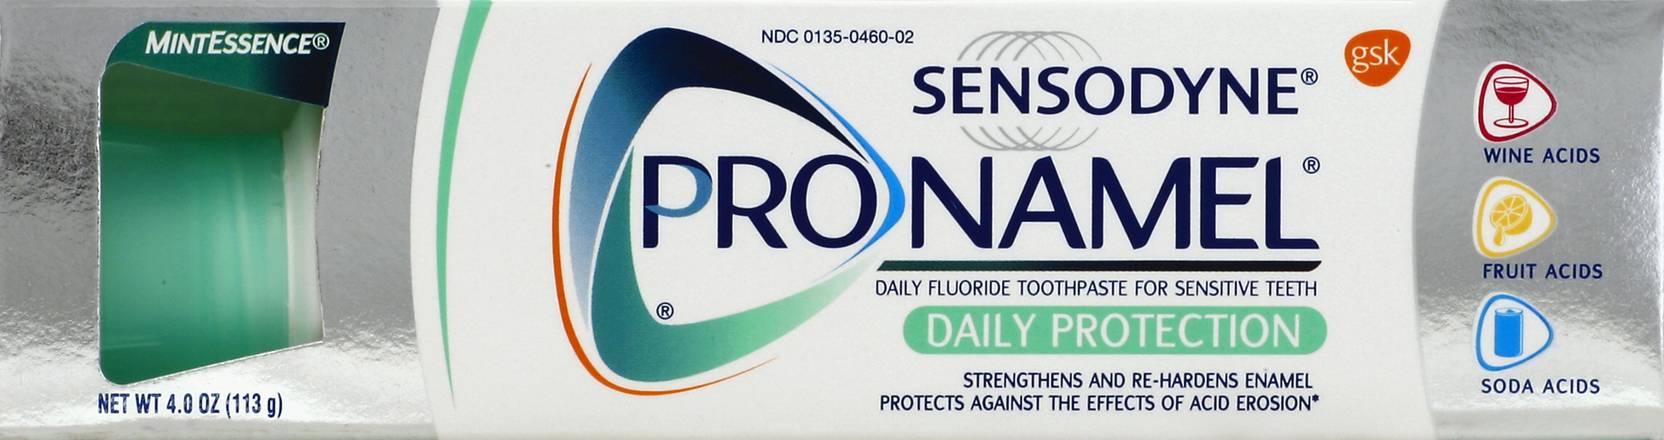 Sensodyne Pronamel Daily Protection Toothpaste Mint Essence